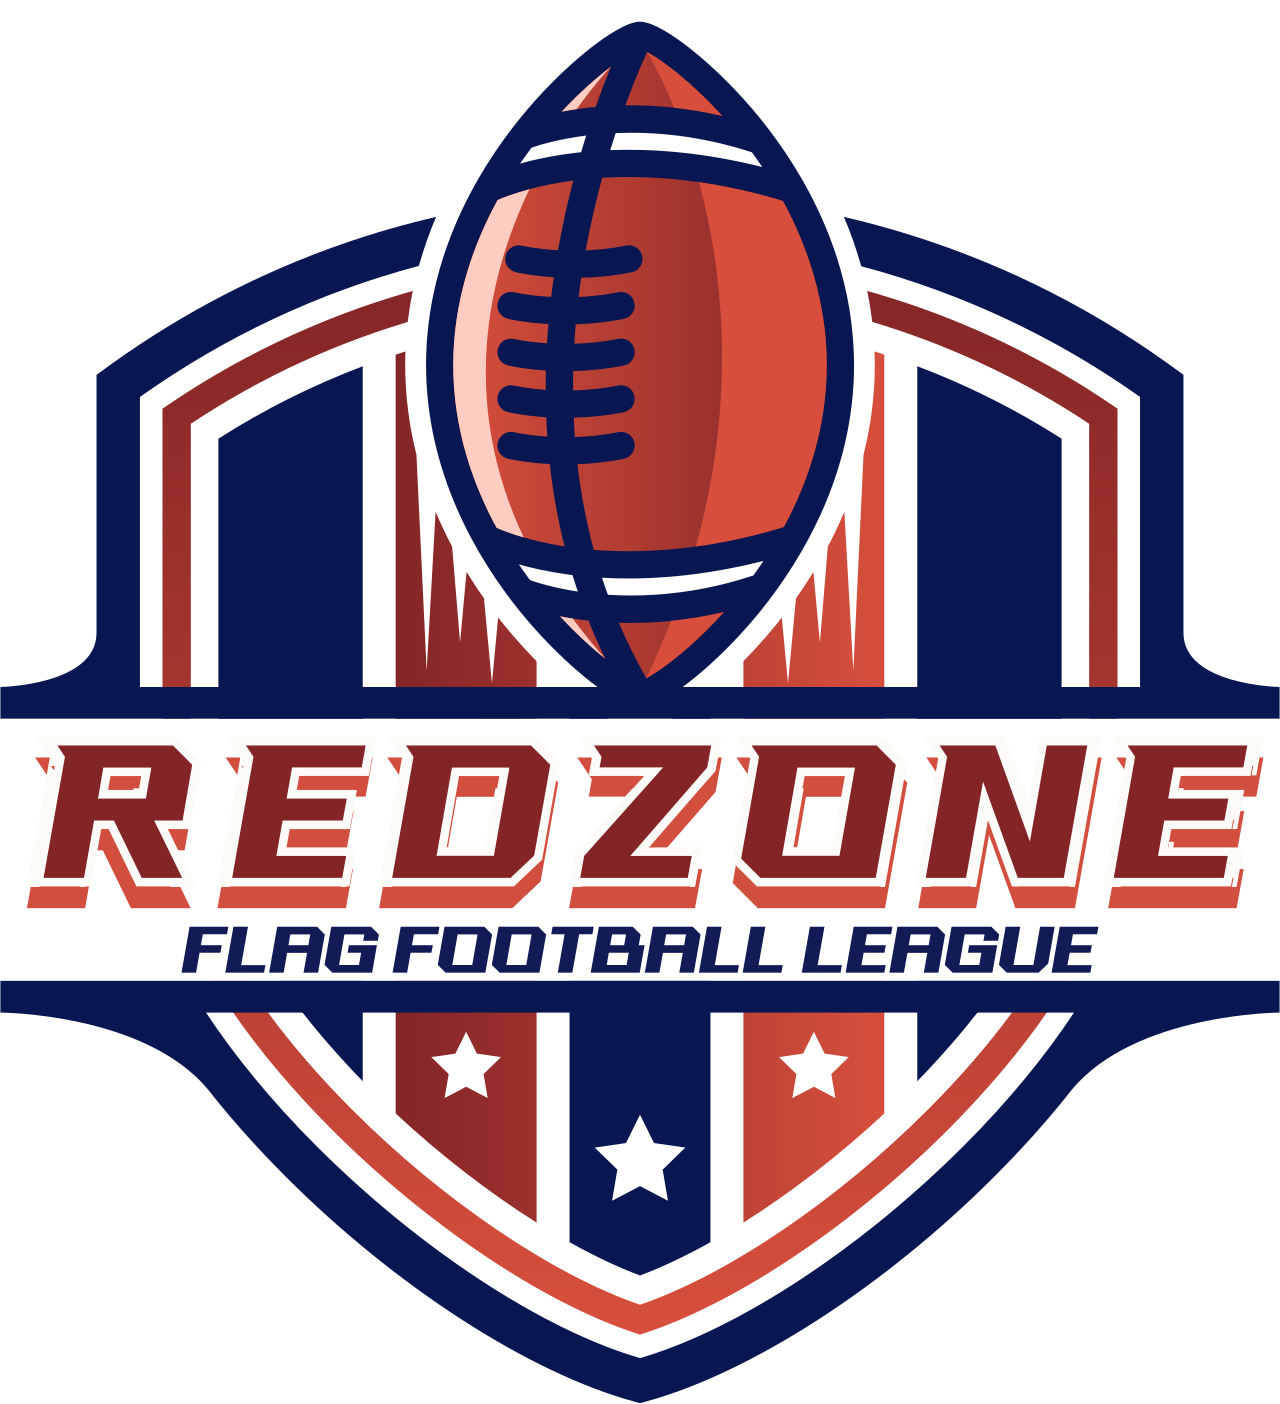 Redzone 's logo